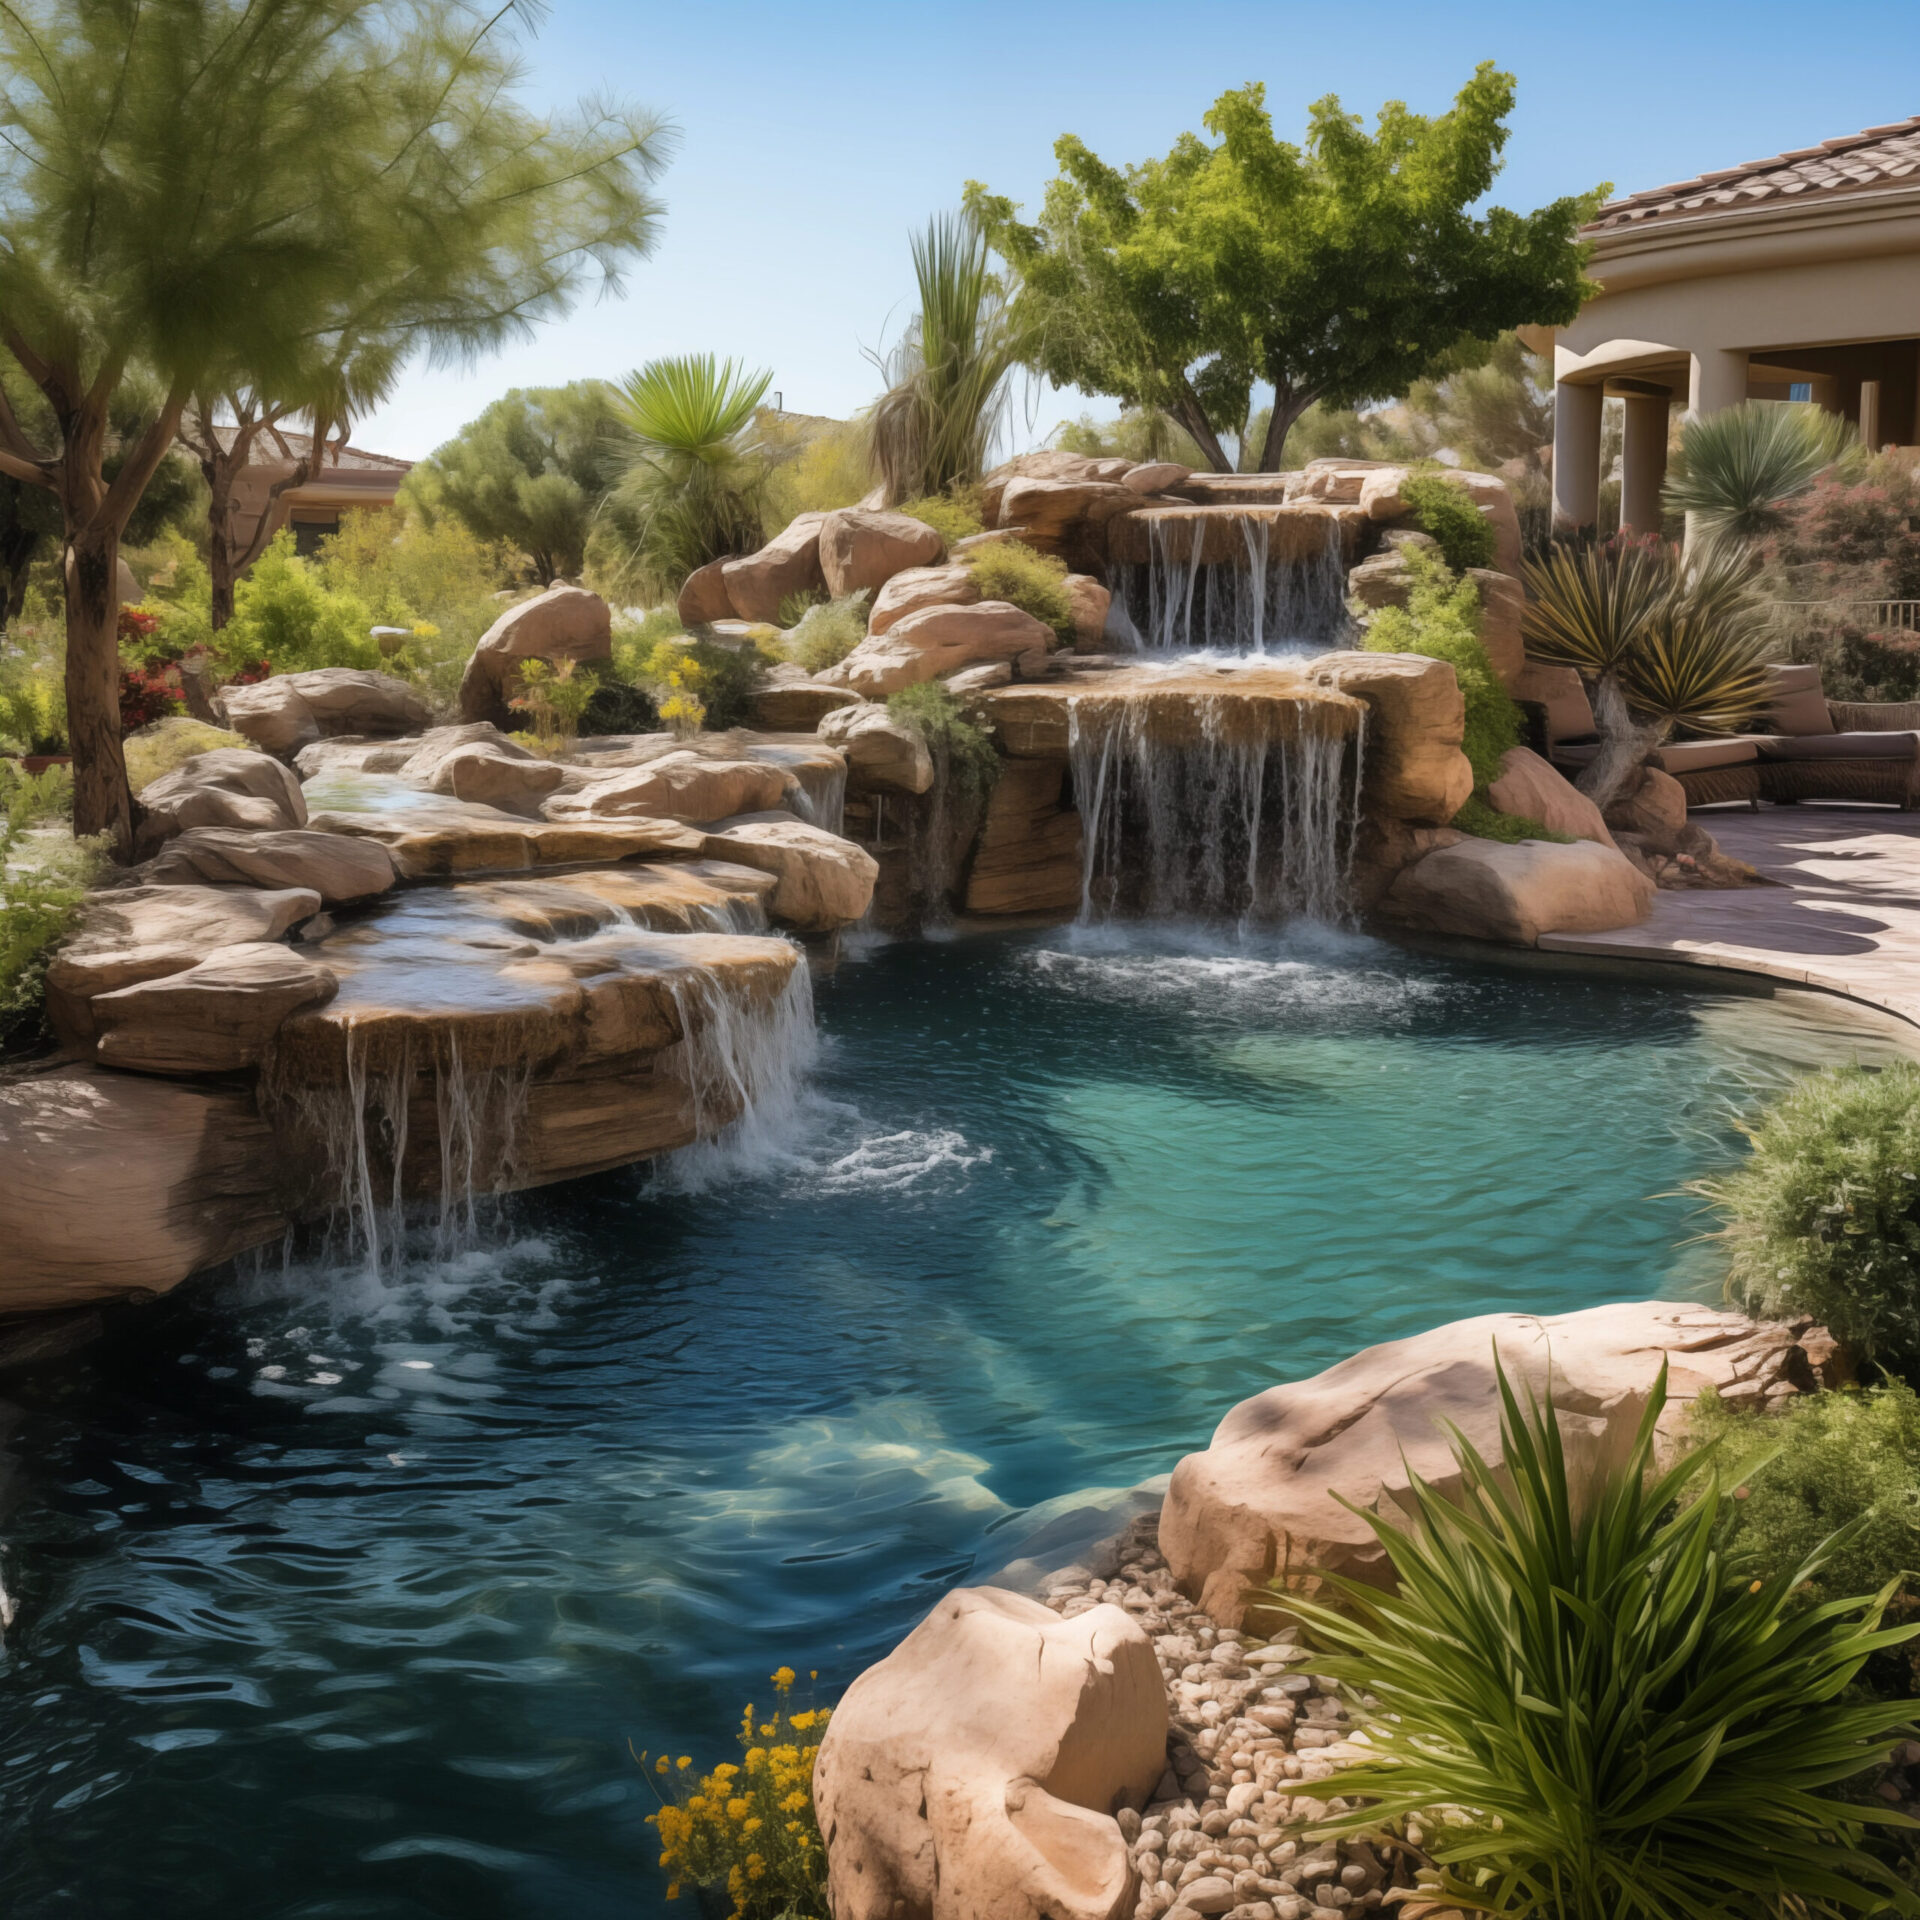 Pond Builders Las Vegas designed this backyard pond with multiple waterfalls.